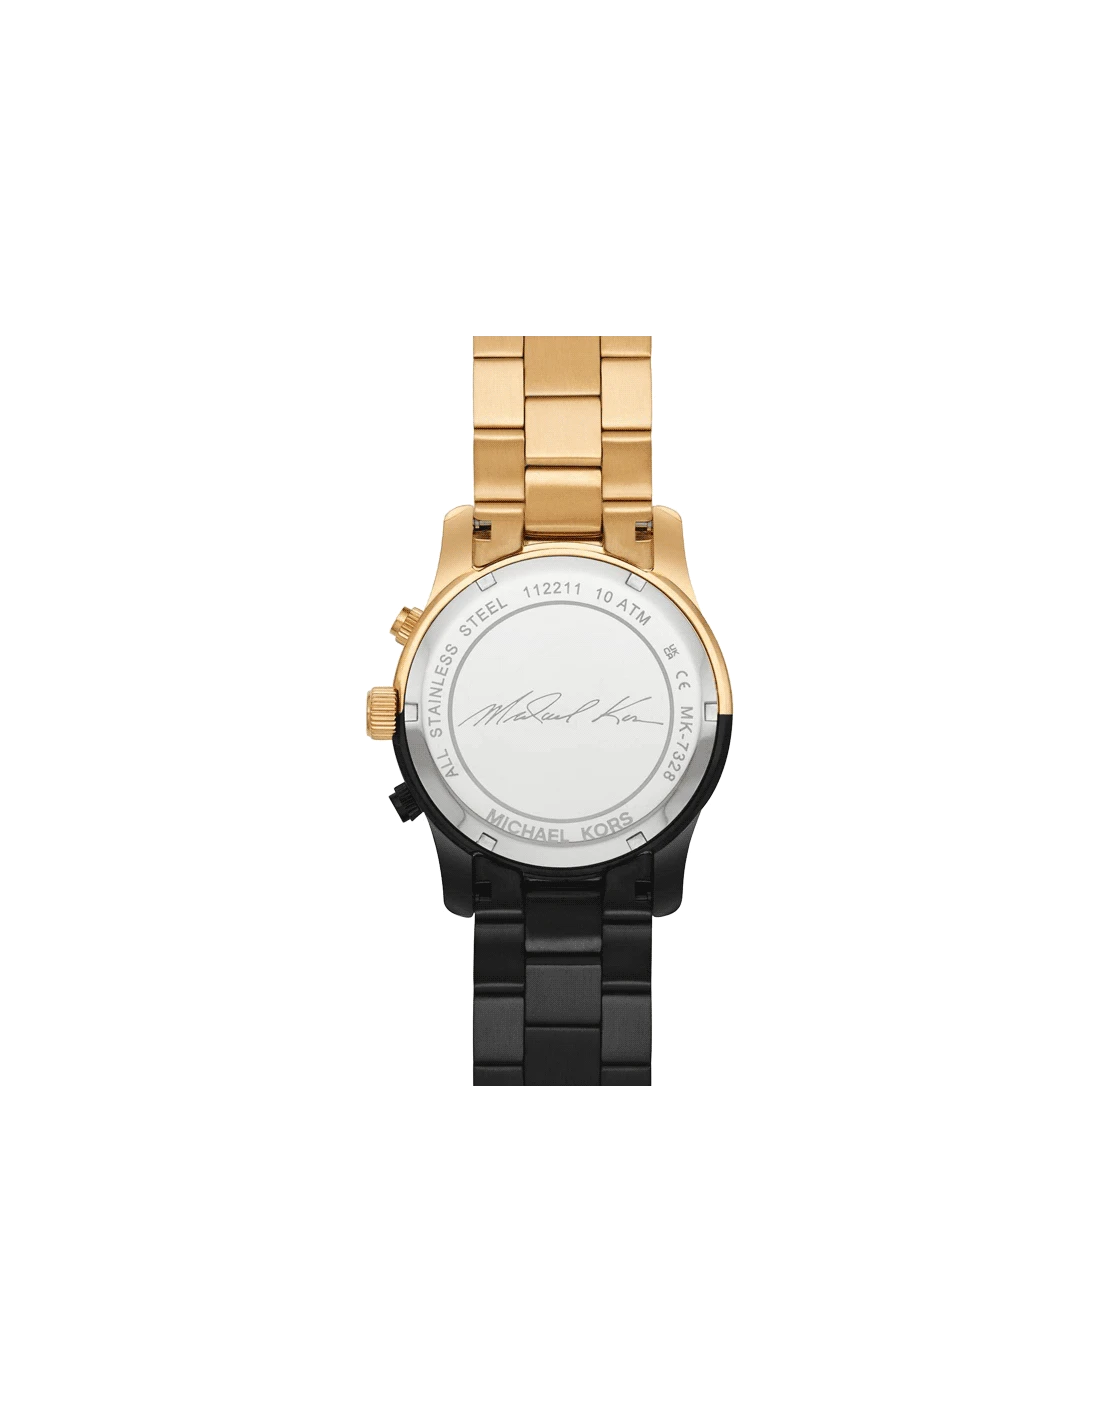 Michael Kors Runway 38 mm Black Dial Stainless Steel Chronograph Watch